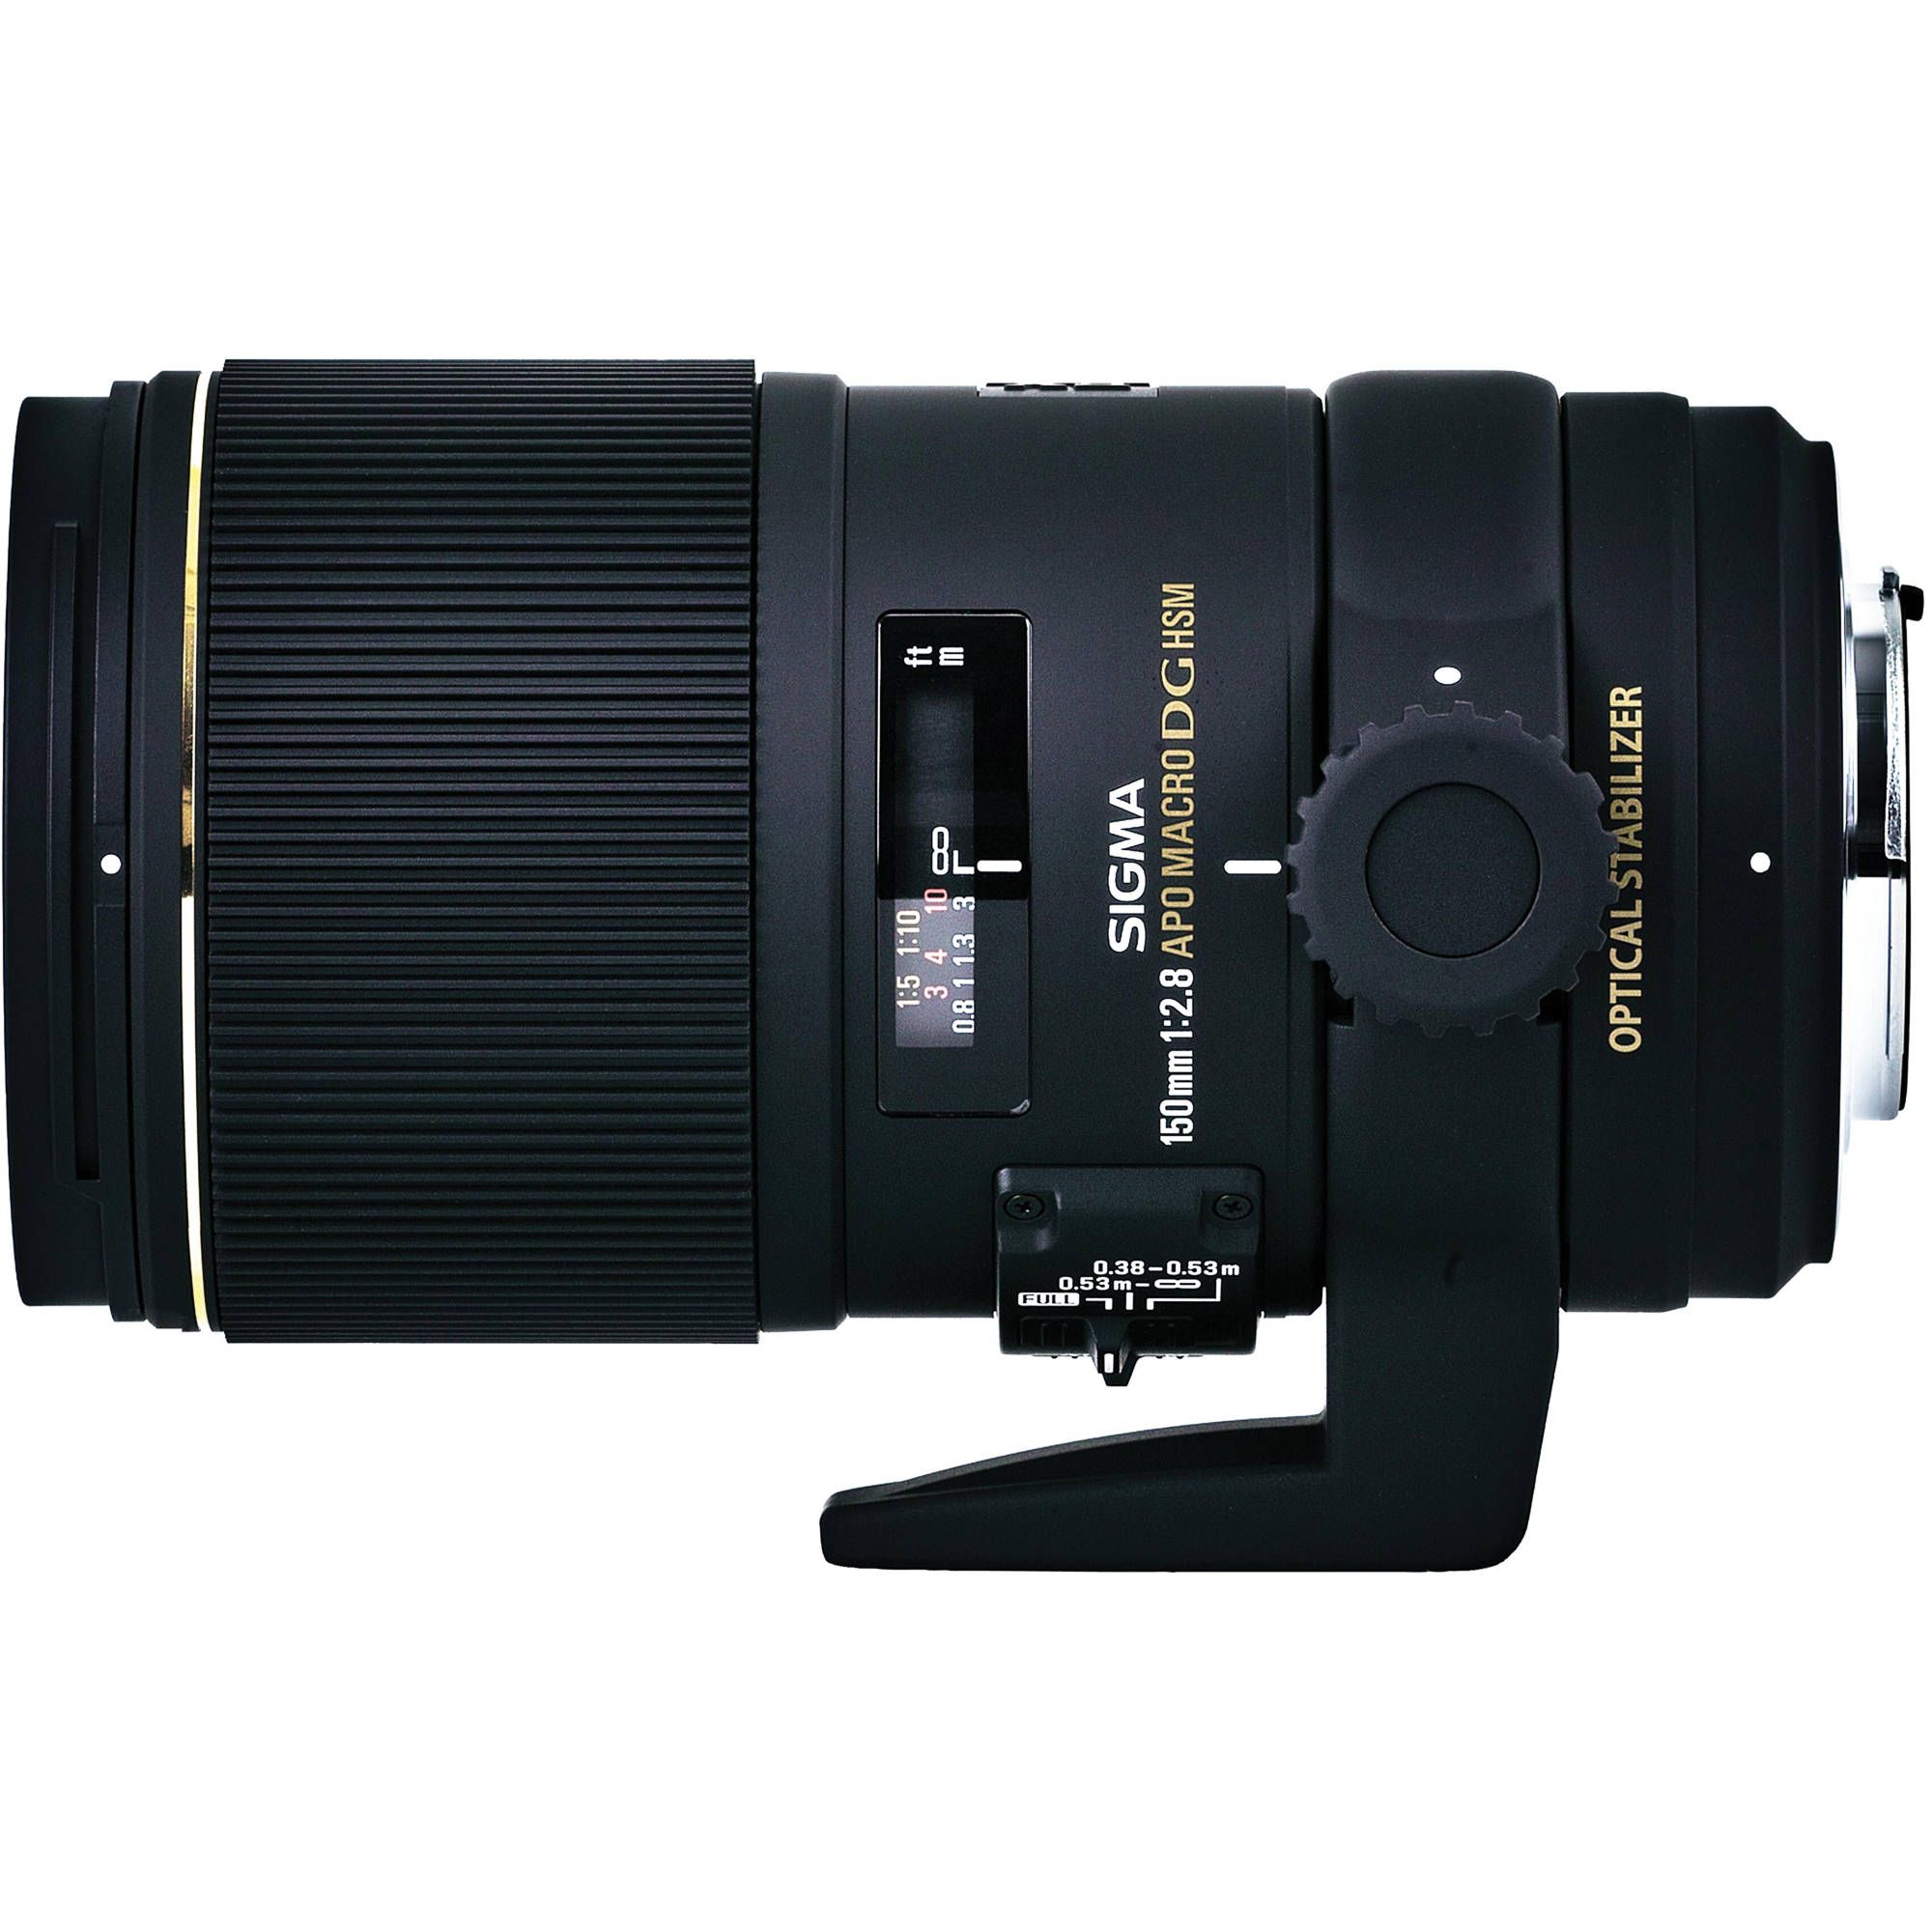 Sony sigma hsm. Sigma 150 macro Nikon. Sigma 150mm f2.8 ex. Sigma af 150mm f/2.8 os HSM apo macro Nikon. Sigma af 105mm f/2.8 ex DG os HSM macro Canon EF.